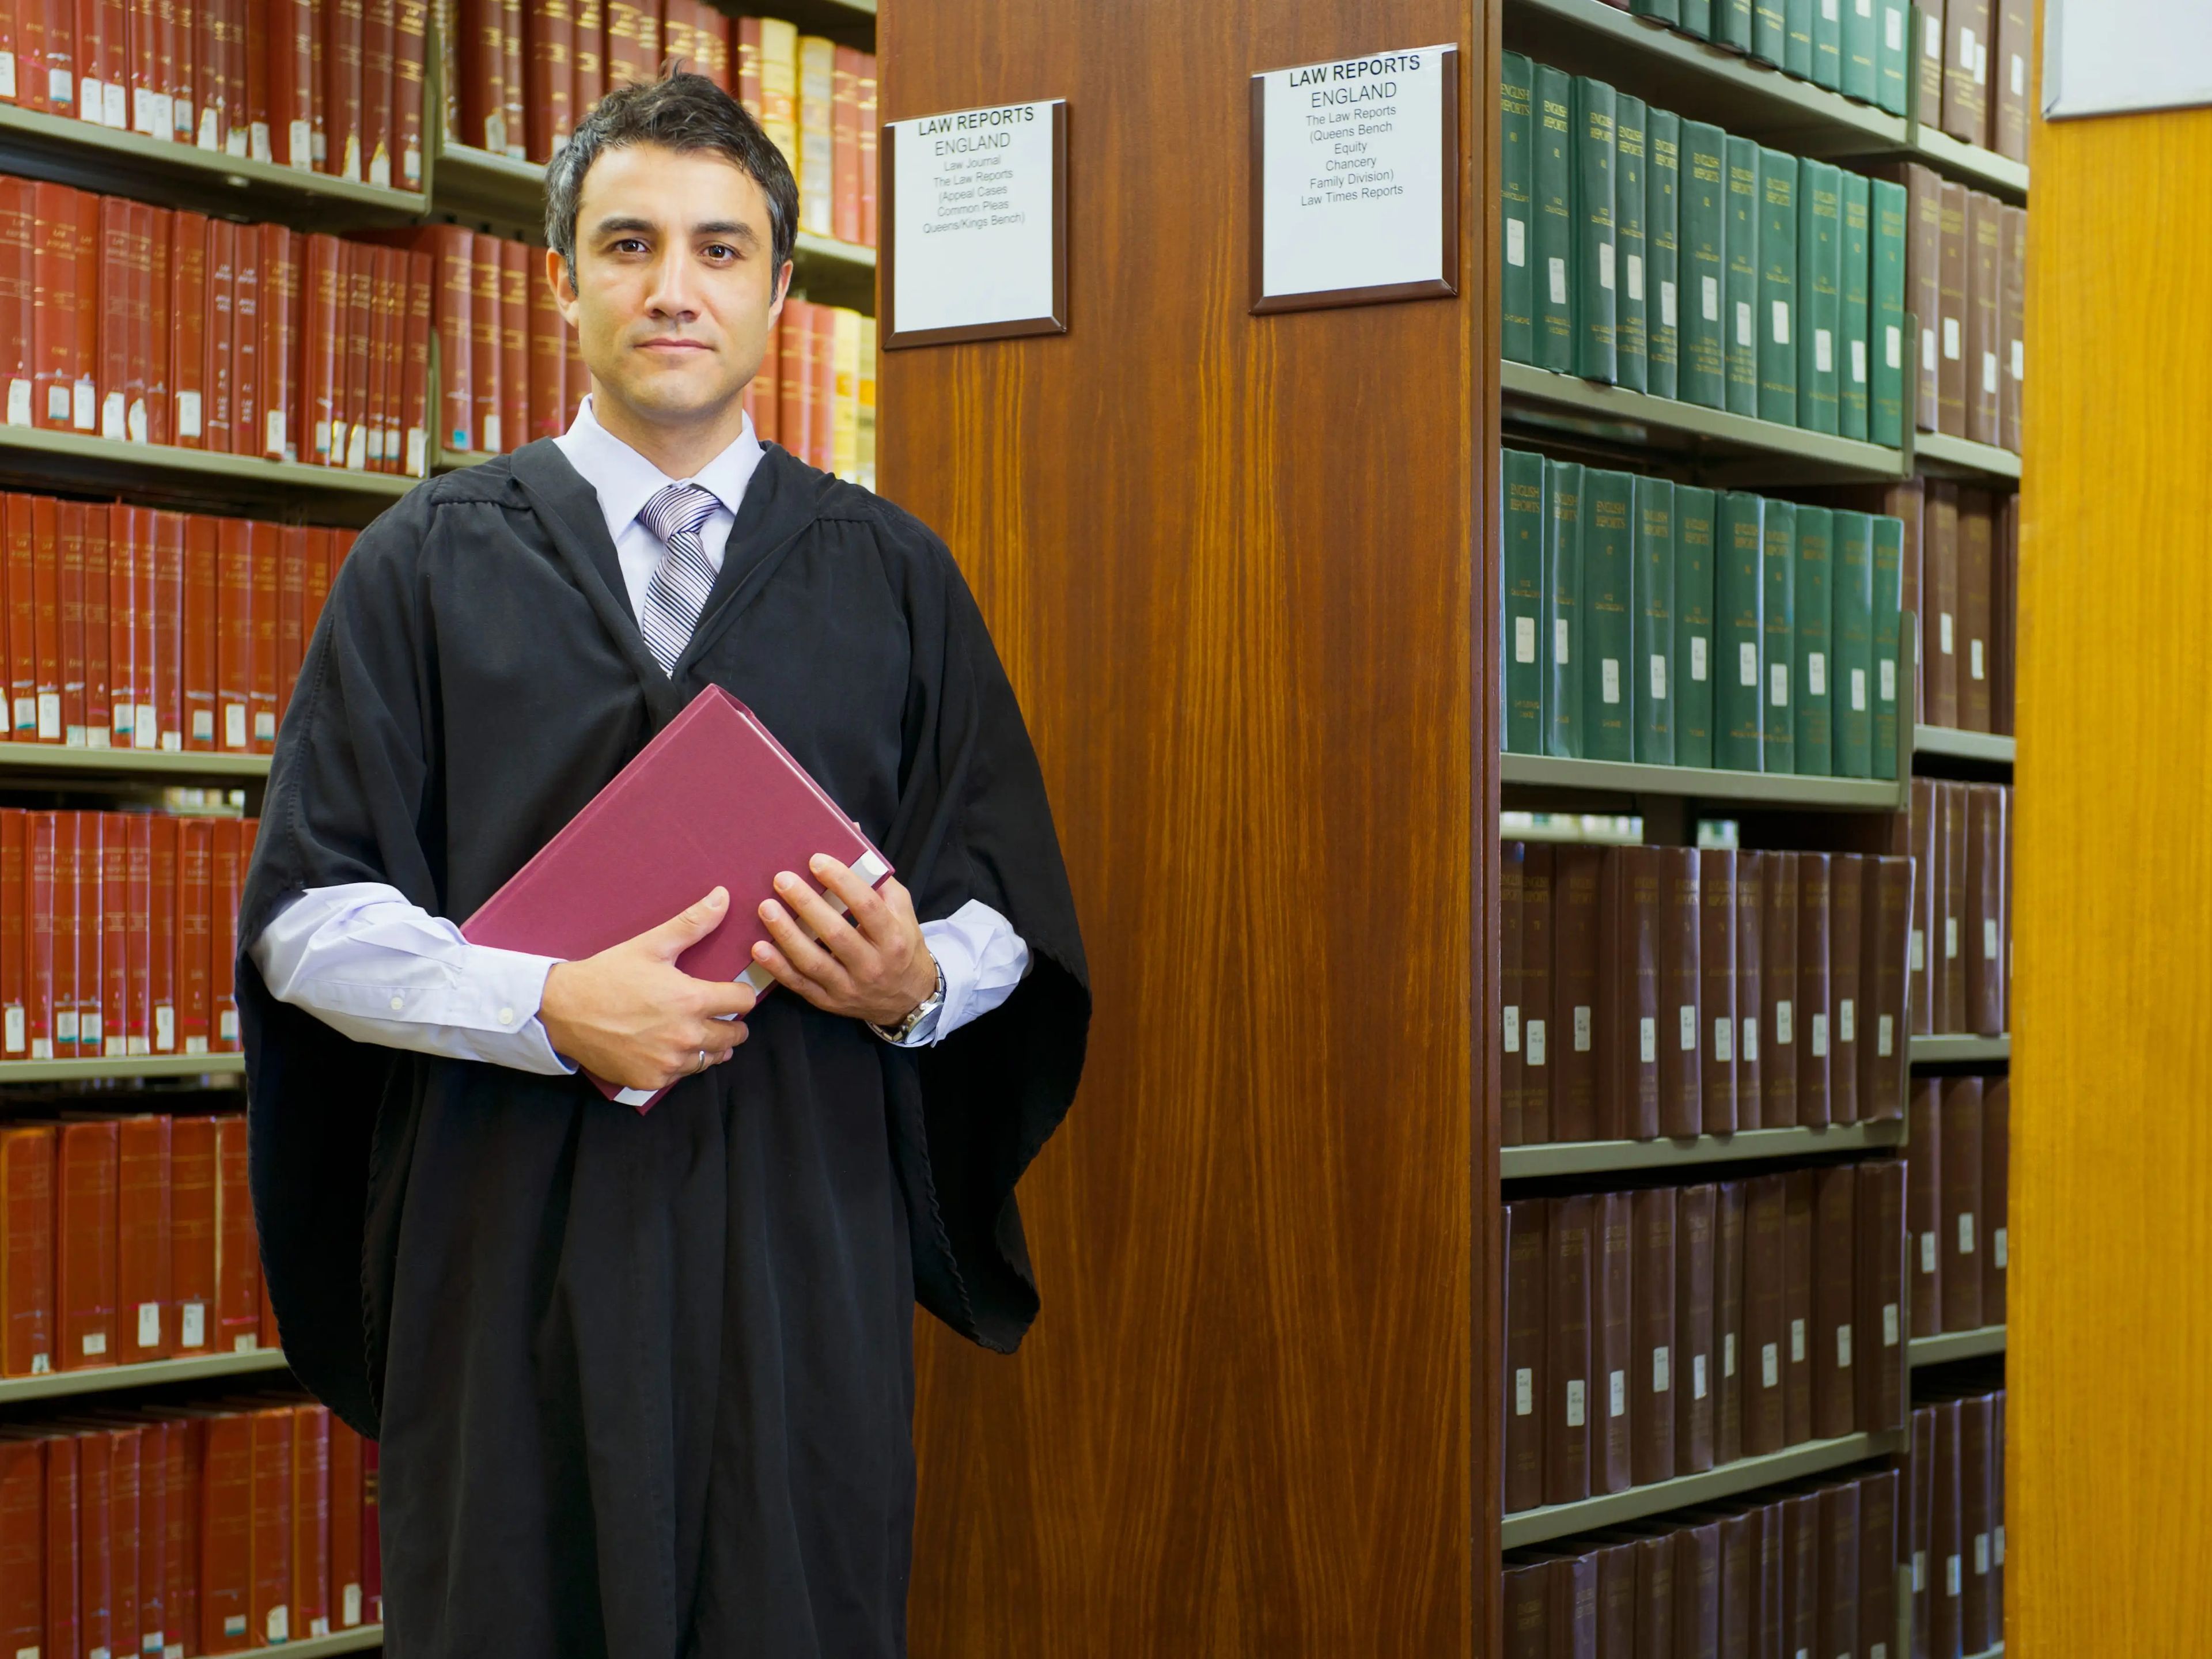 Law professor